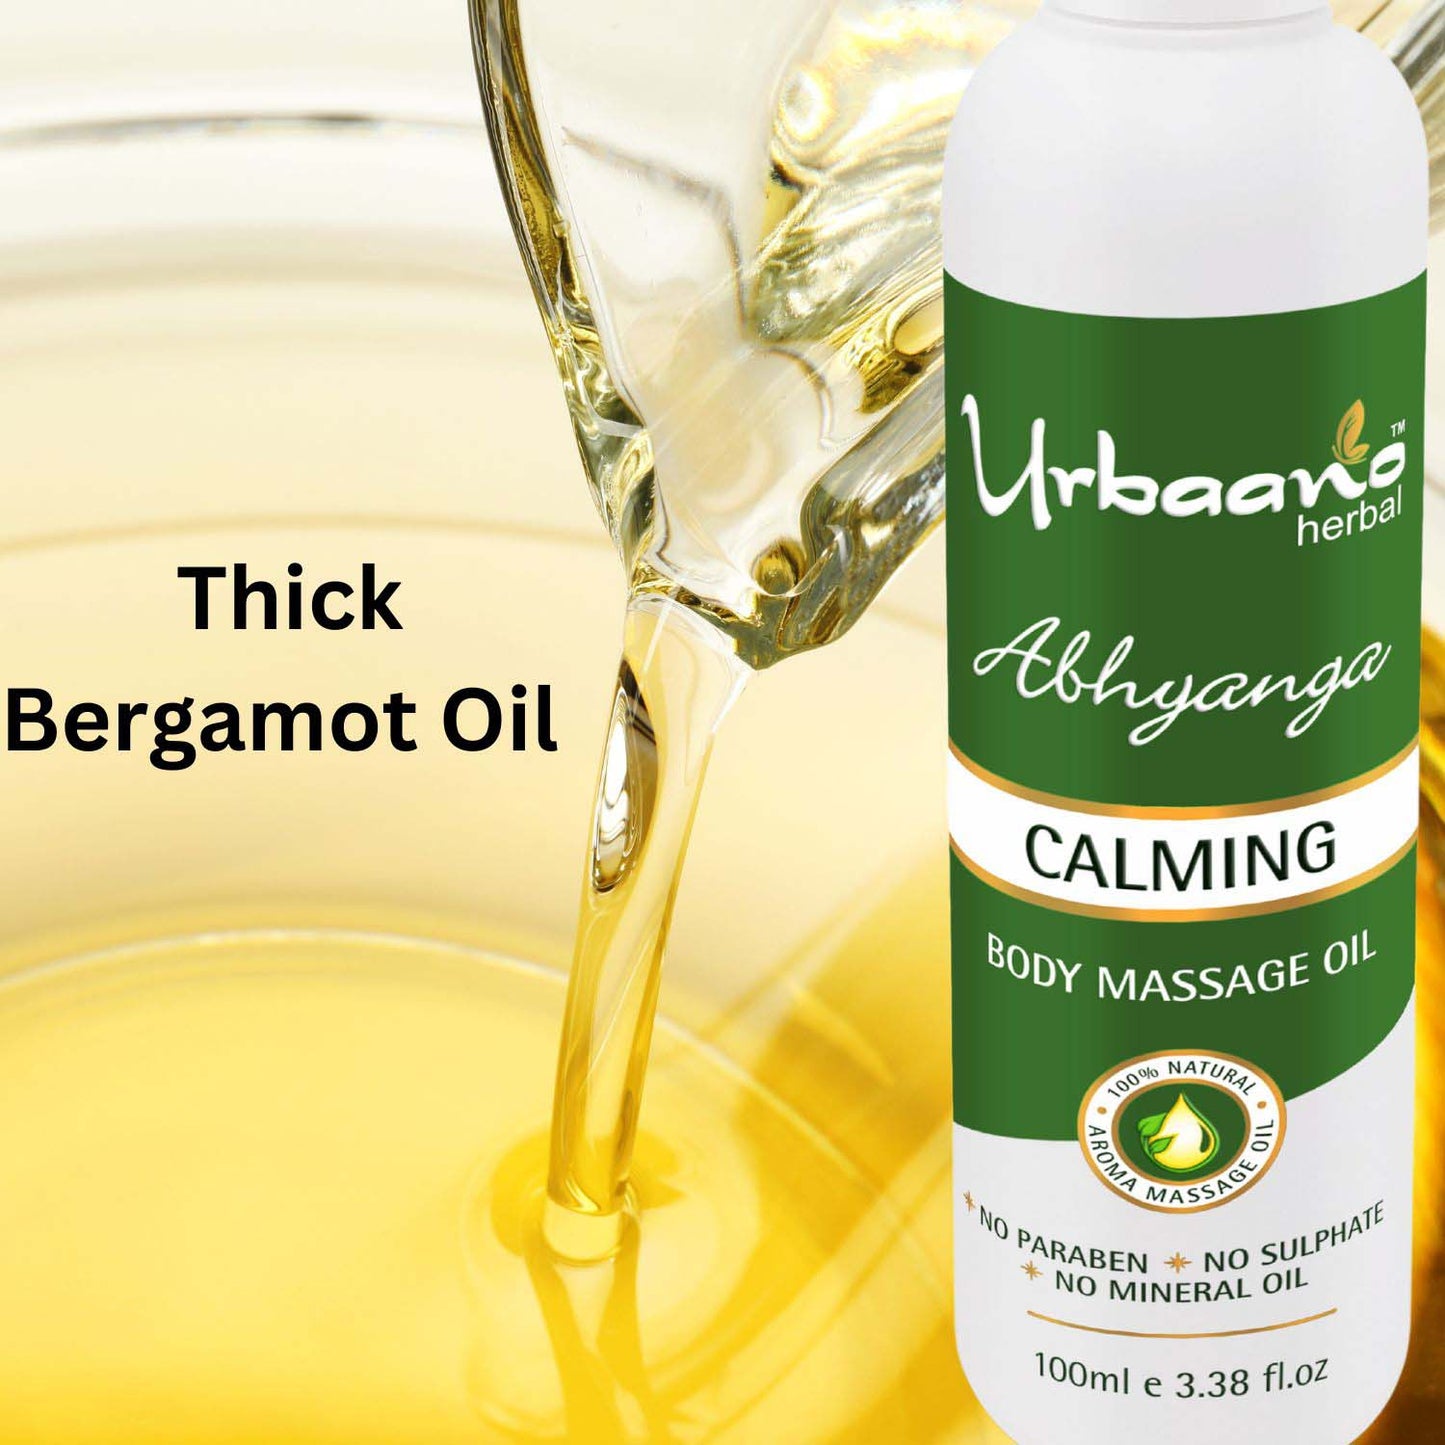 urbaano herbal bath body massage de stress oil for nourished glowing skin